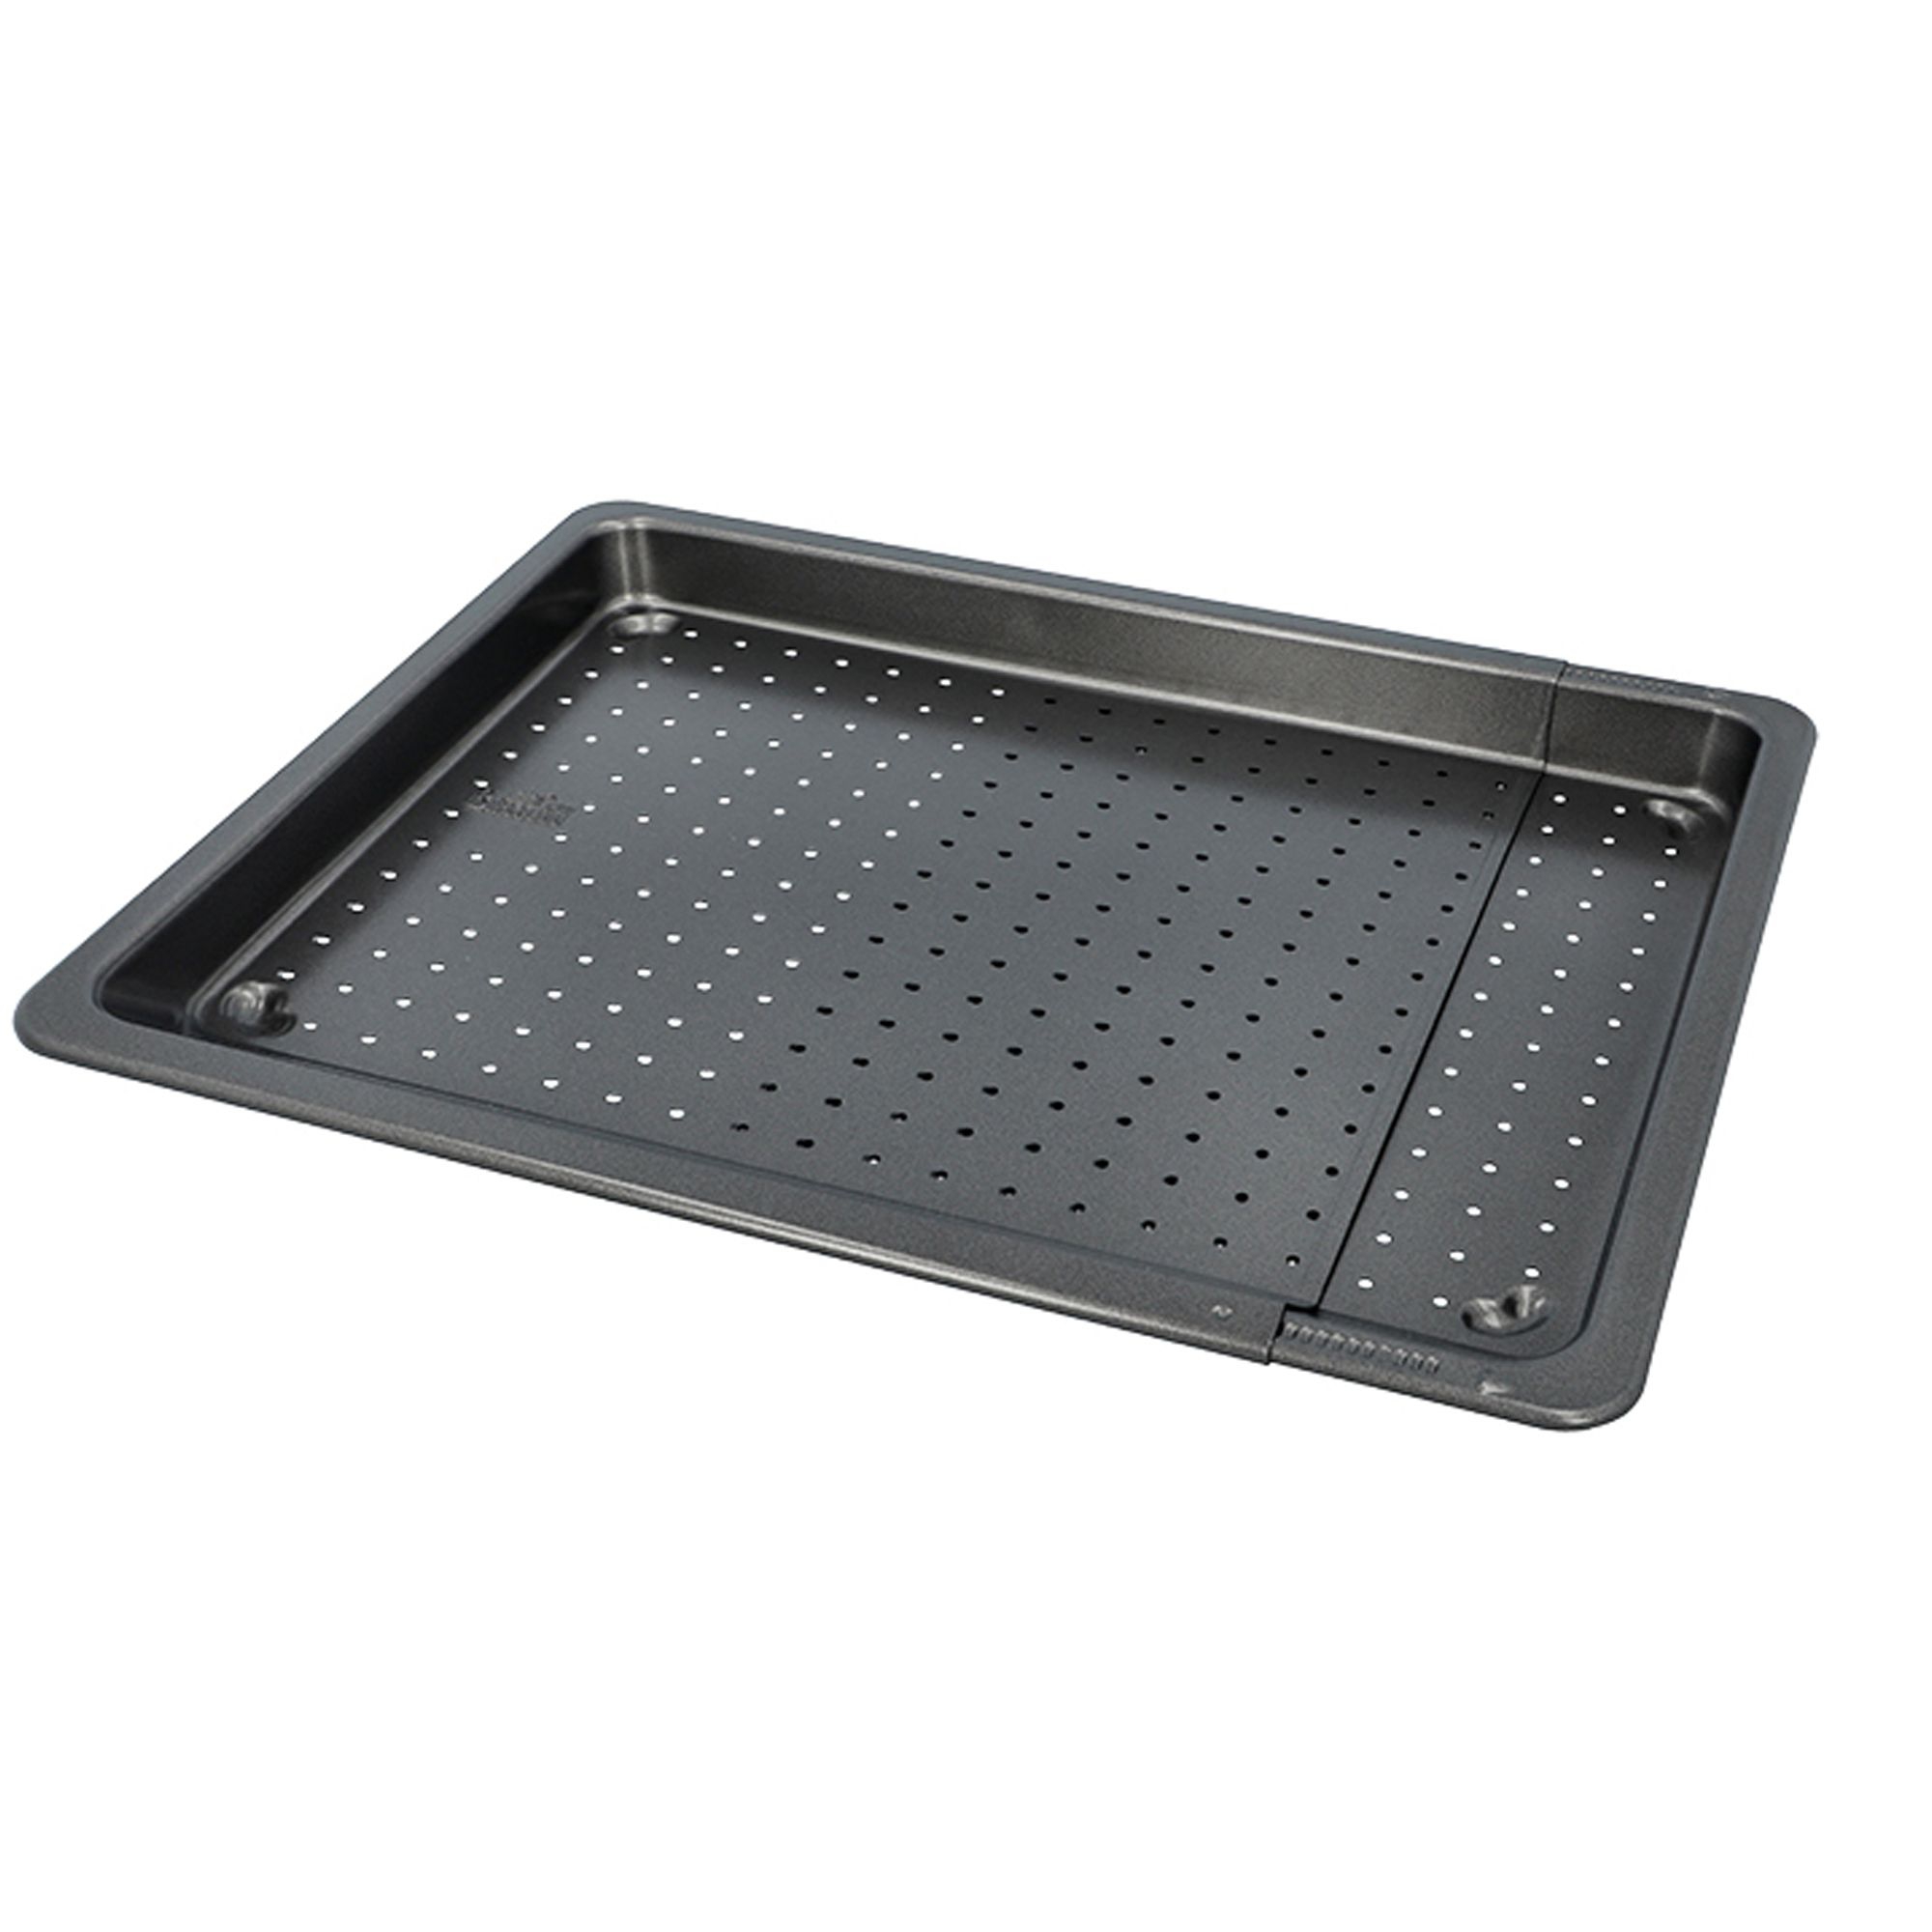 RBV Birkmann -  Laib & Seele - Baking tray - adjustable - 36 x 33 cm